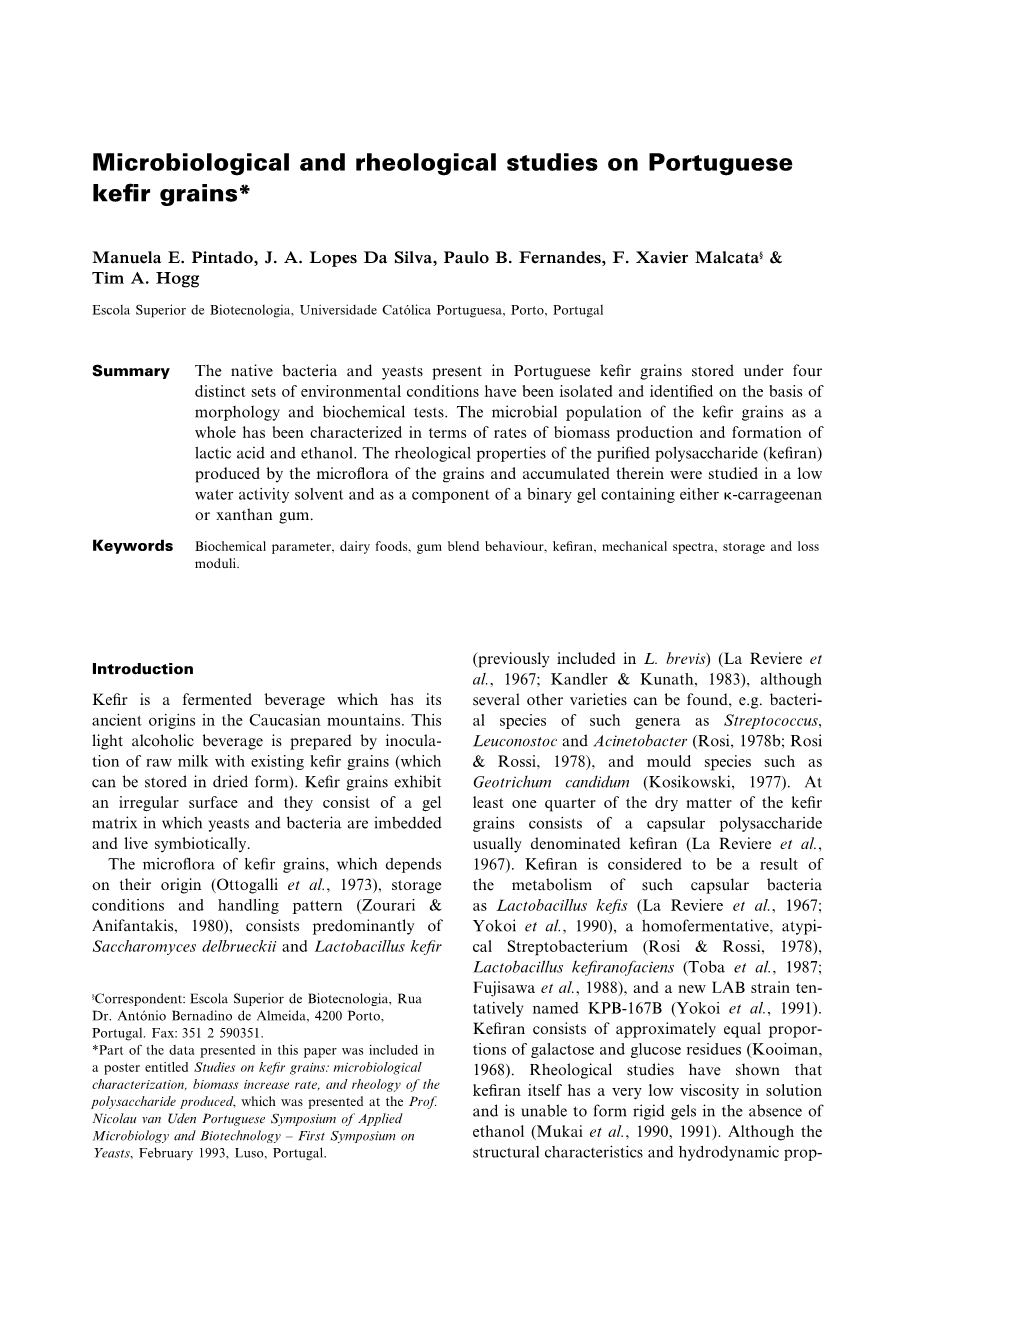 Microbiological and Rheological Studies on Portuguese Kefir Grains*